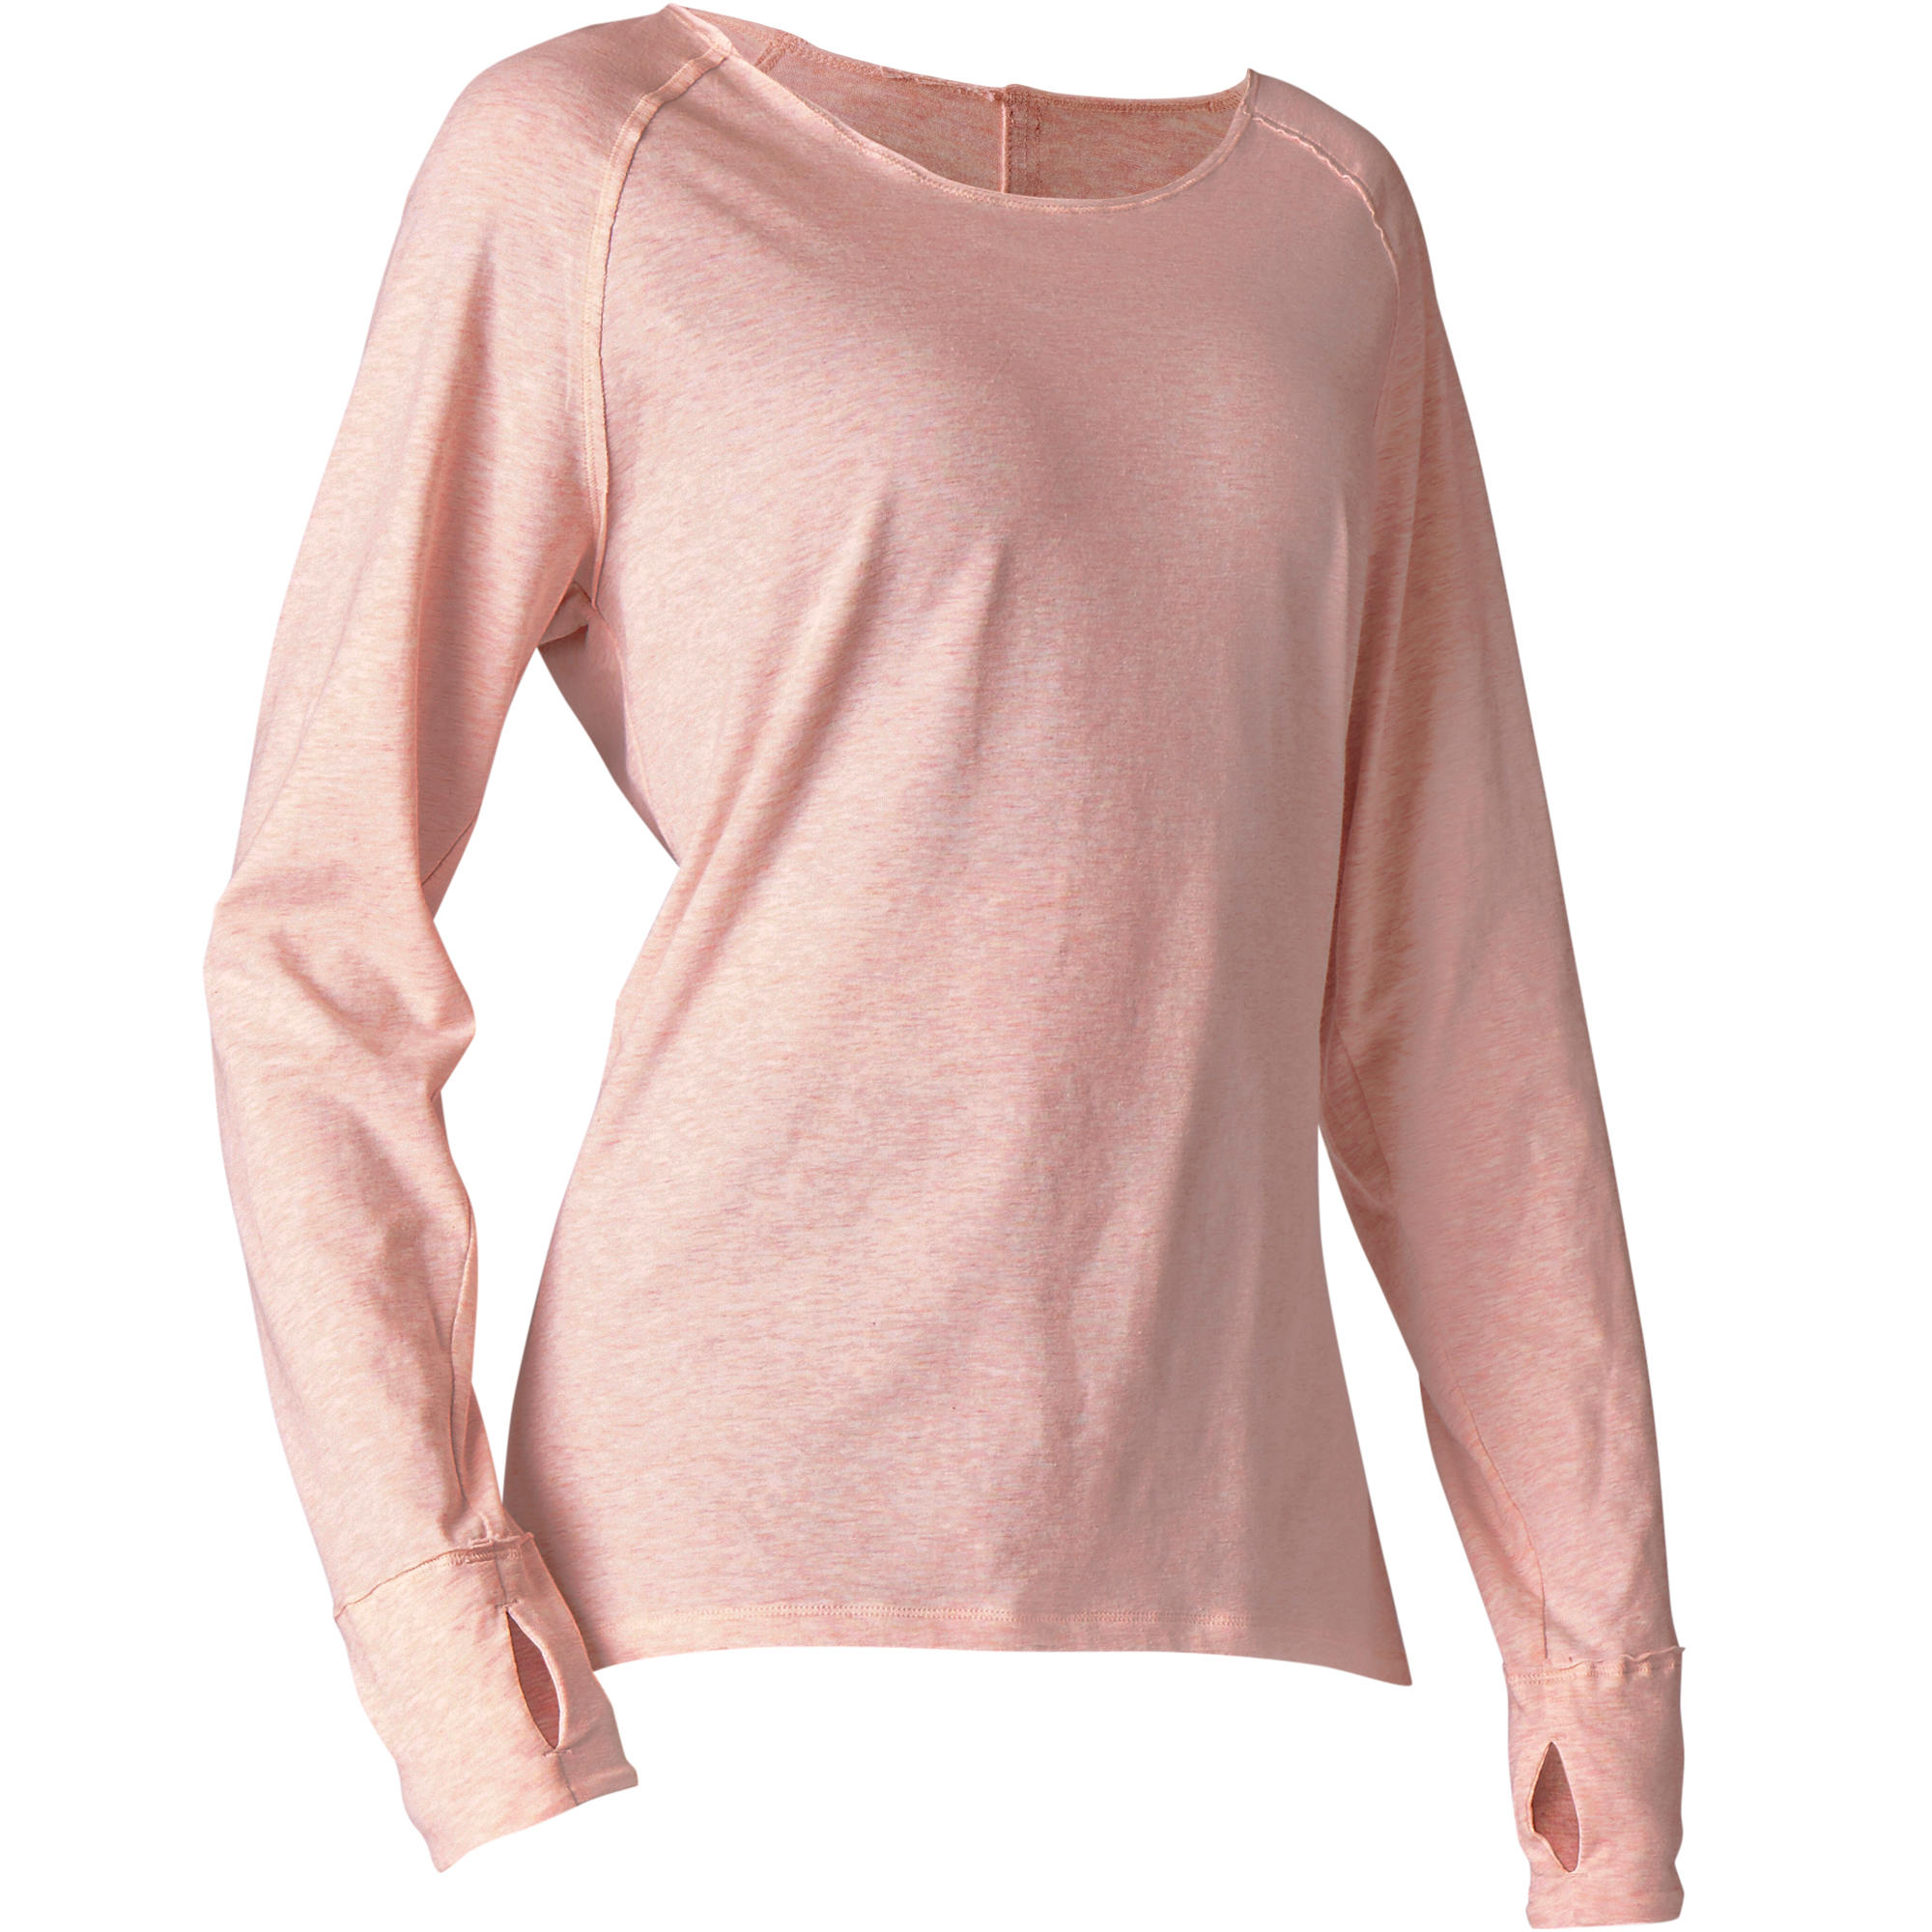 KIMJALY Organic Cotton Long-Sleeved Gentle Yoga T-Shirt - Pink